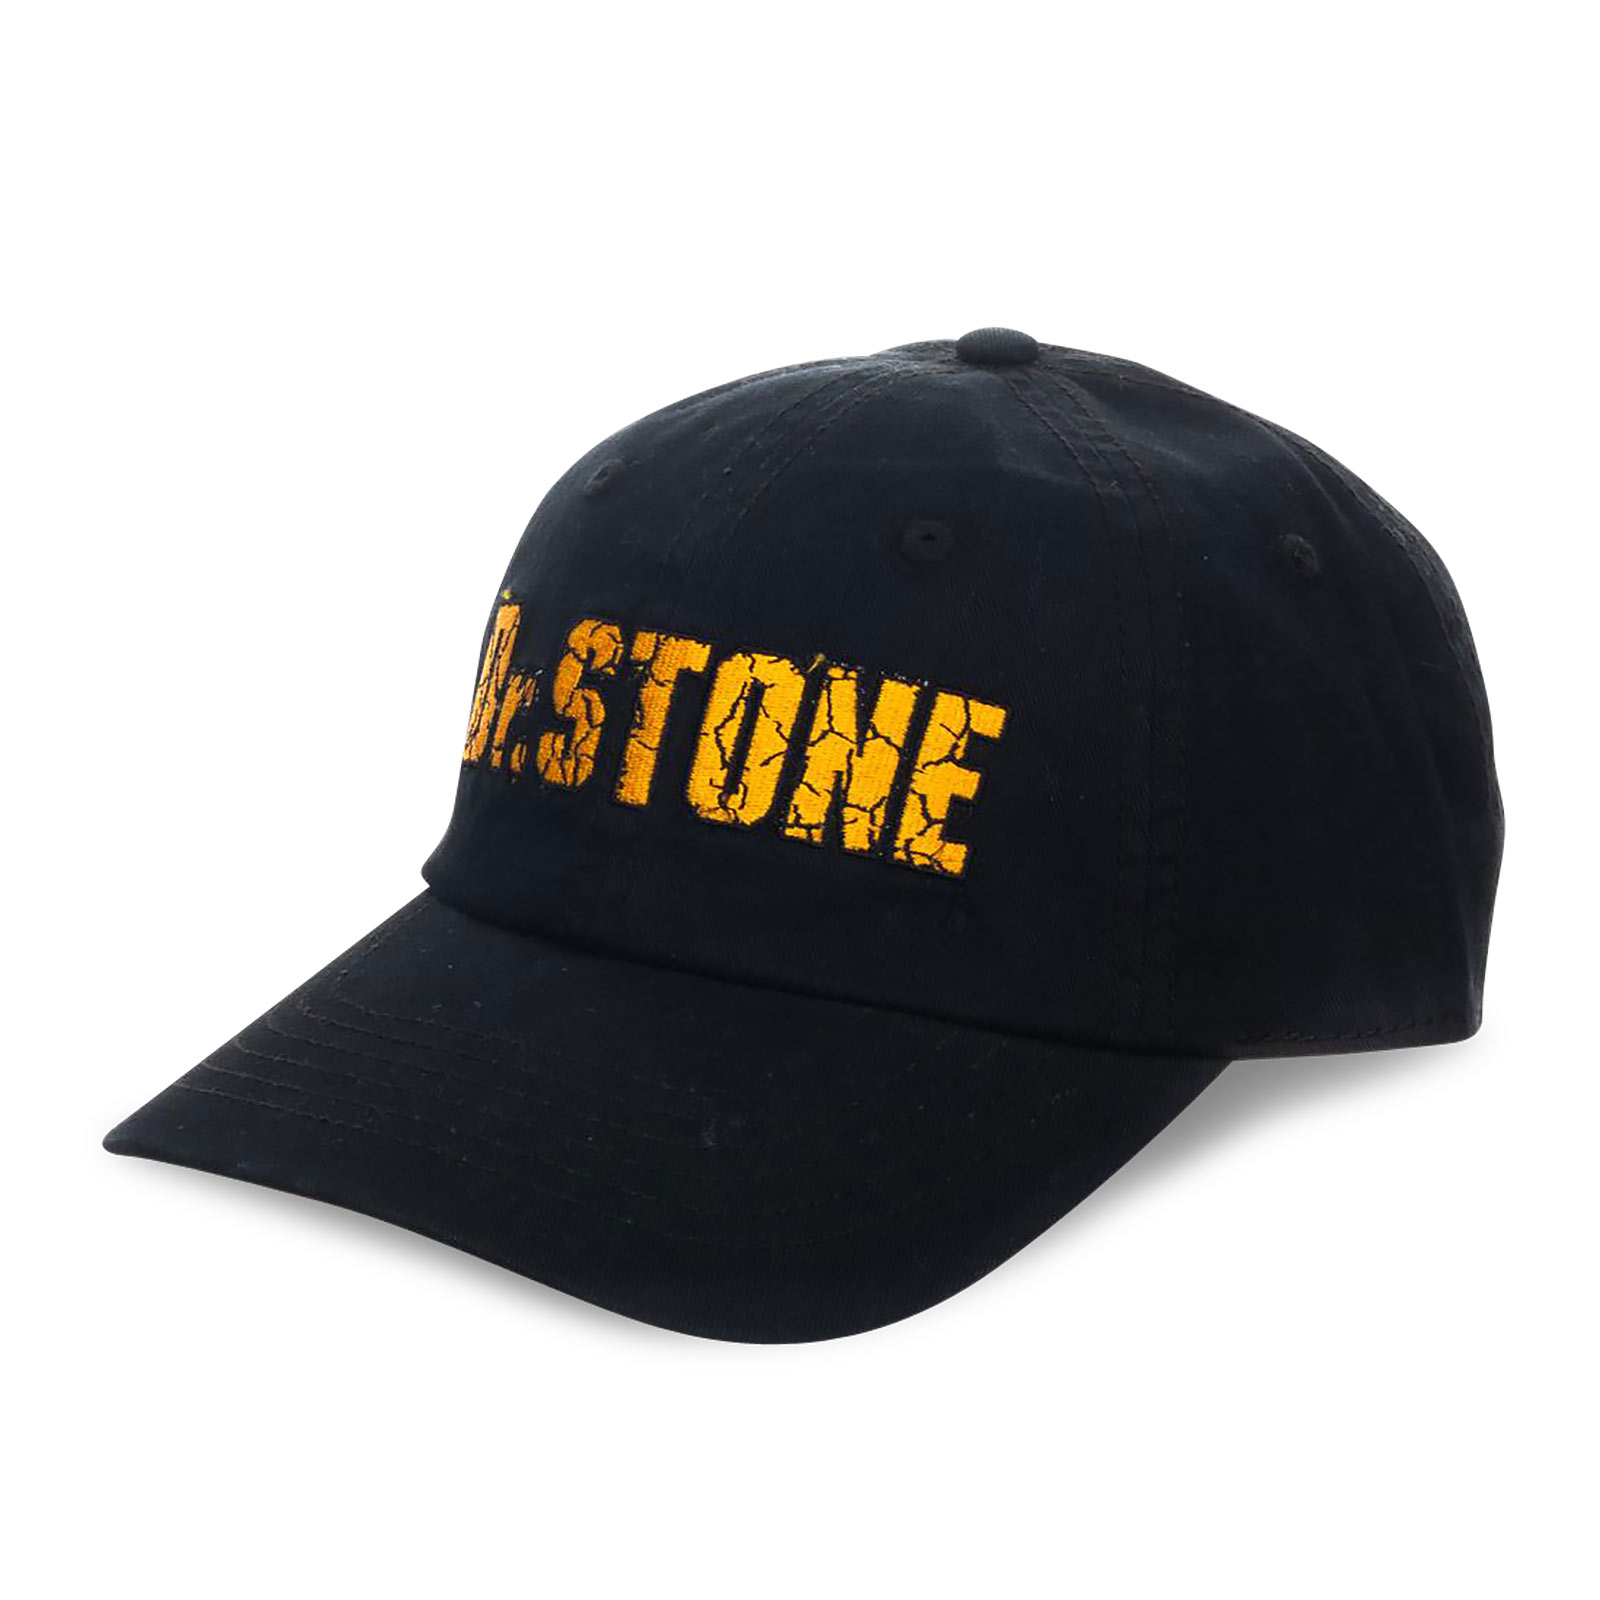 Dr. Stone - Logo Basecap schwarz